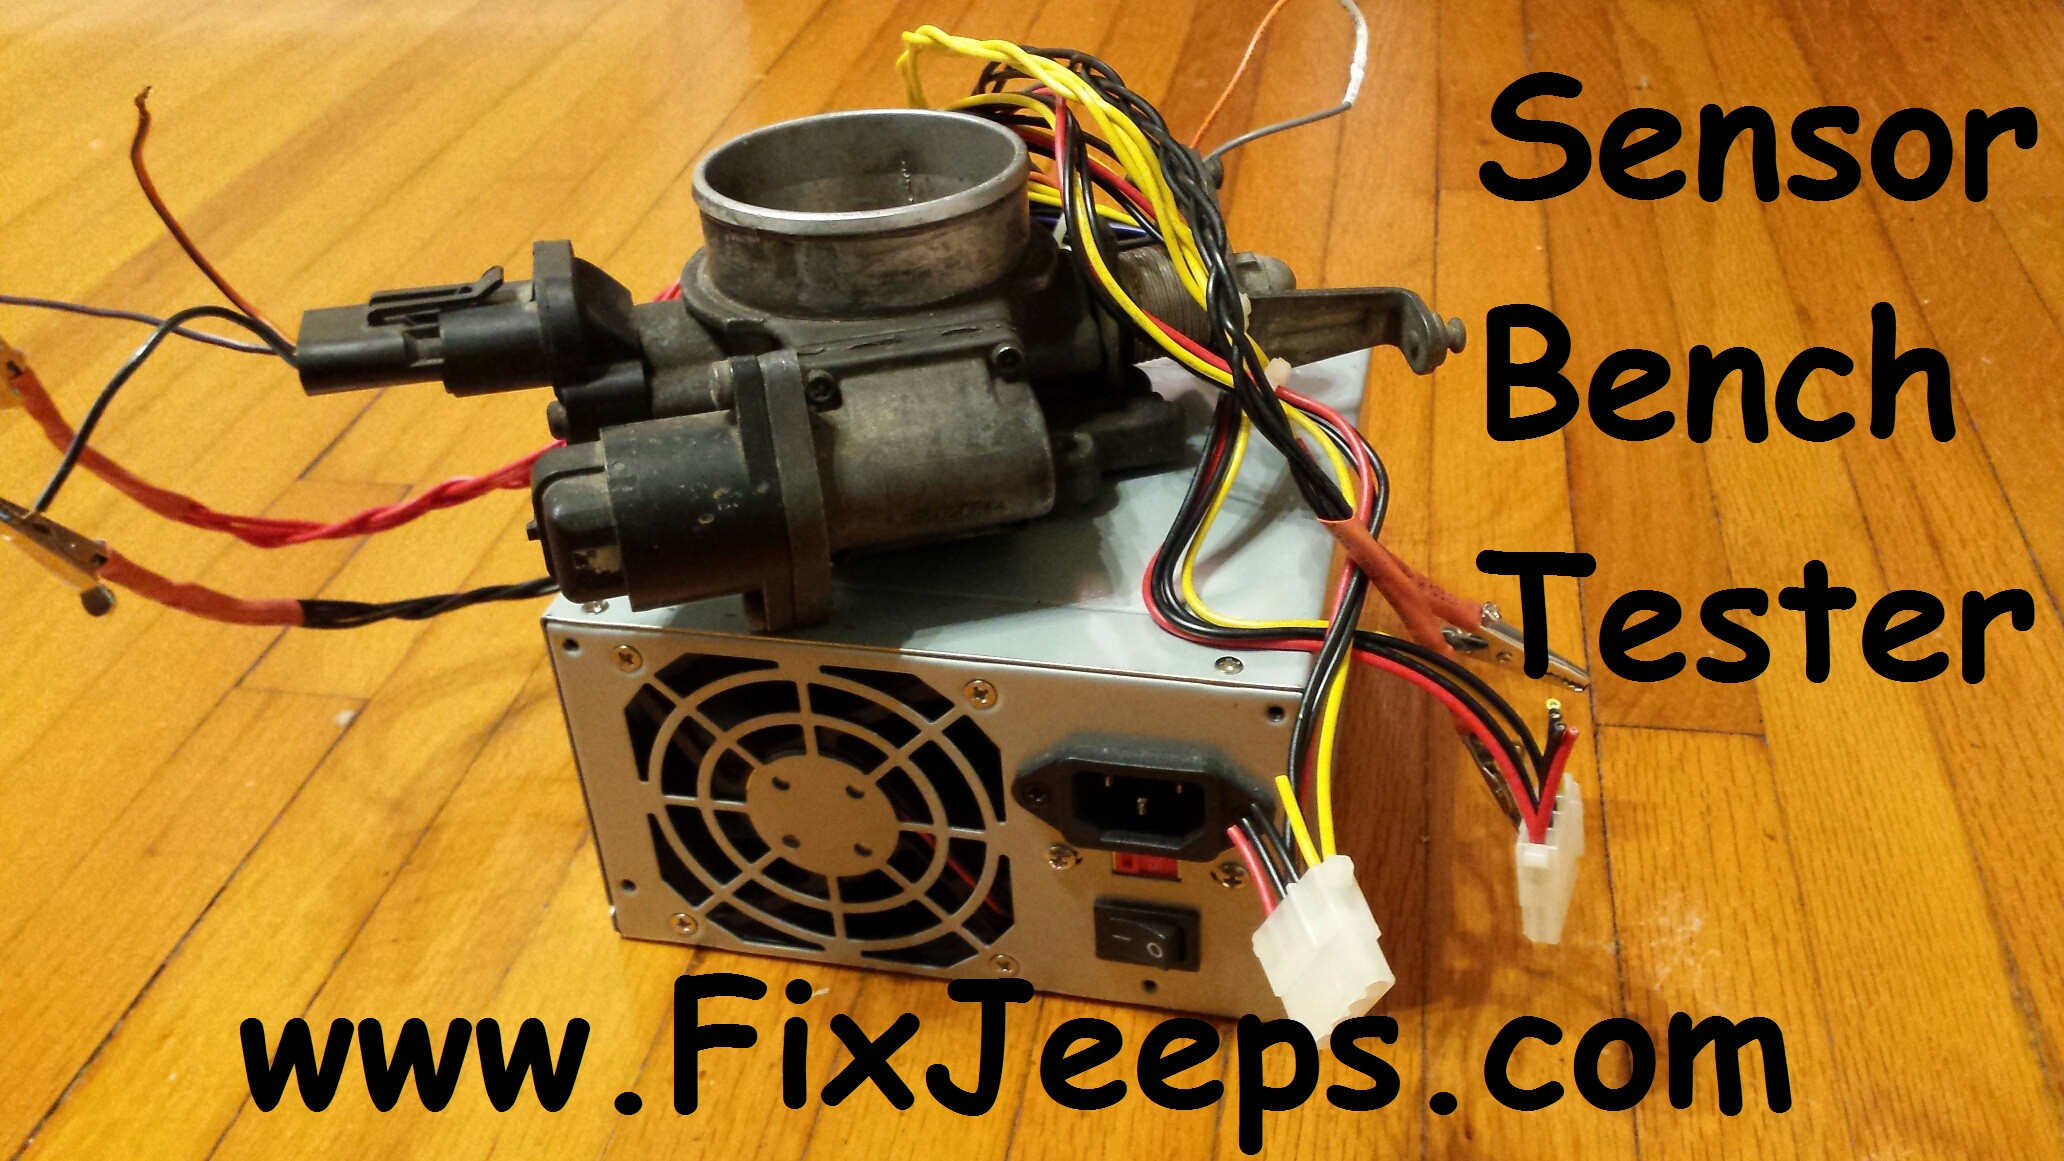 Bench top Jeep sensor tester